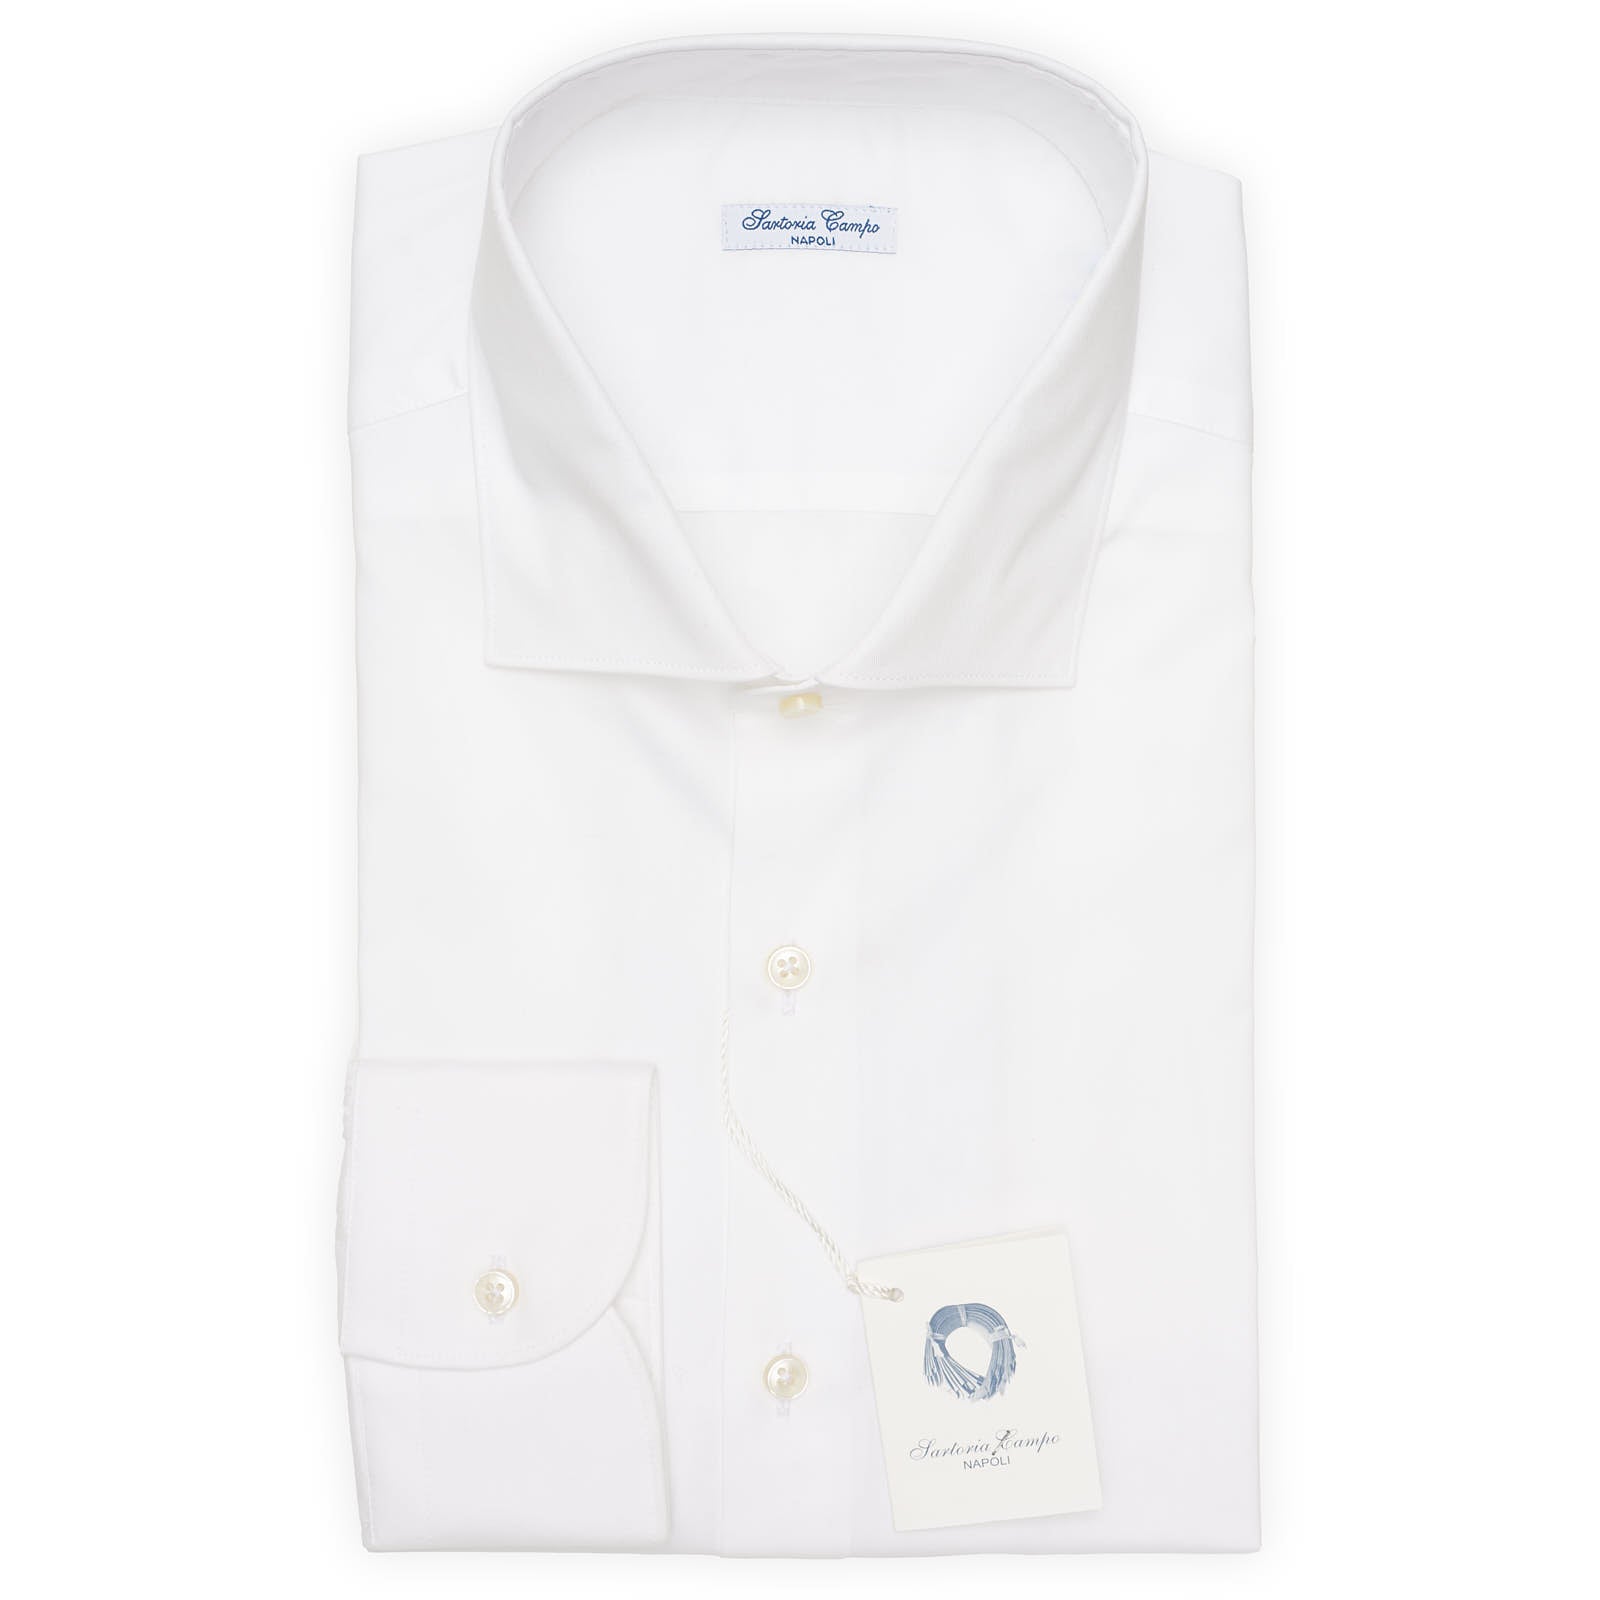 SARTORIA CAMPO NAPOLI White Poplin Cotton Dress Shirt